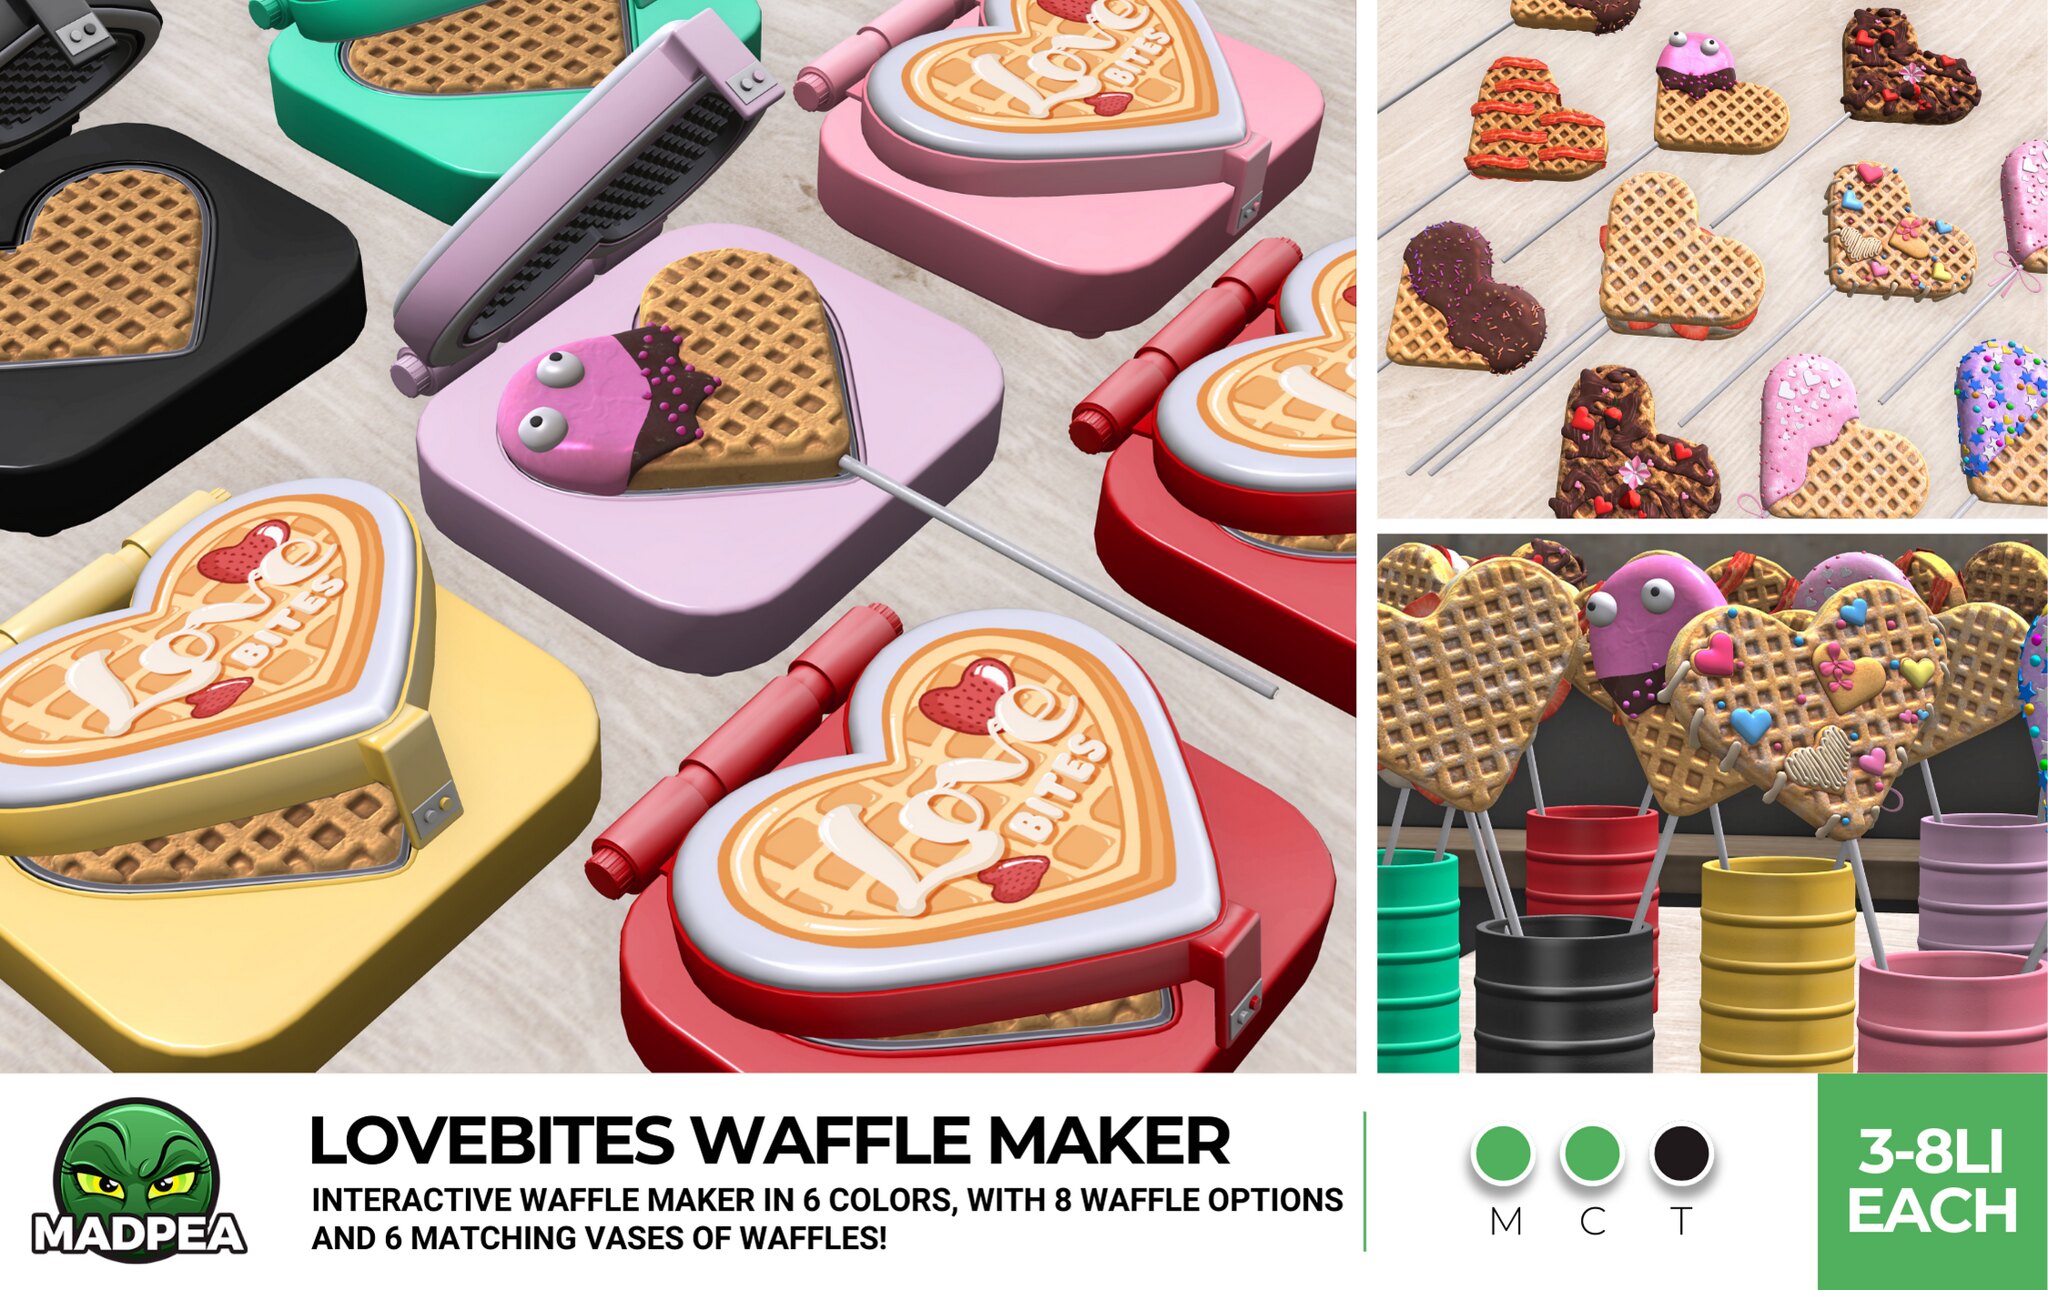 MadPea – Lovebites Waffle Maker